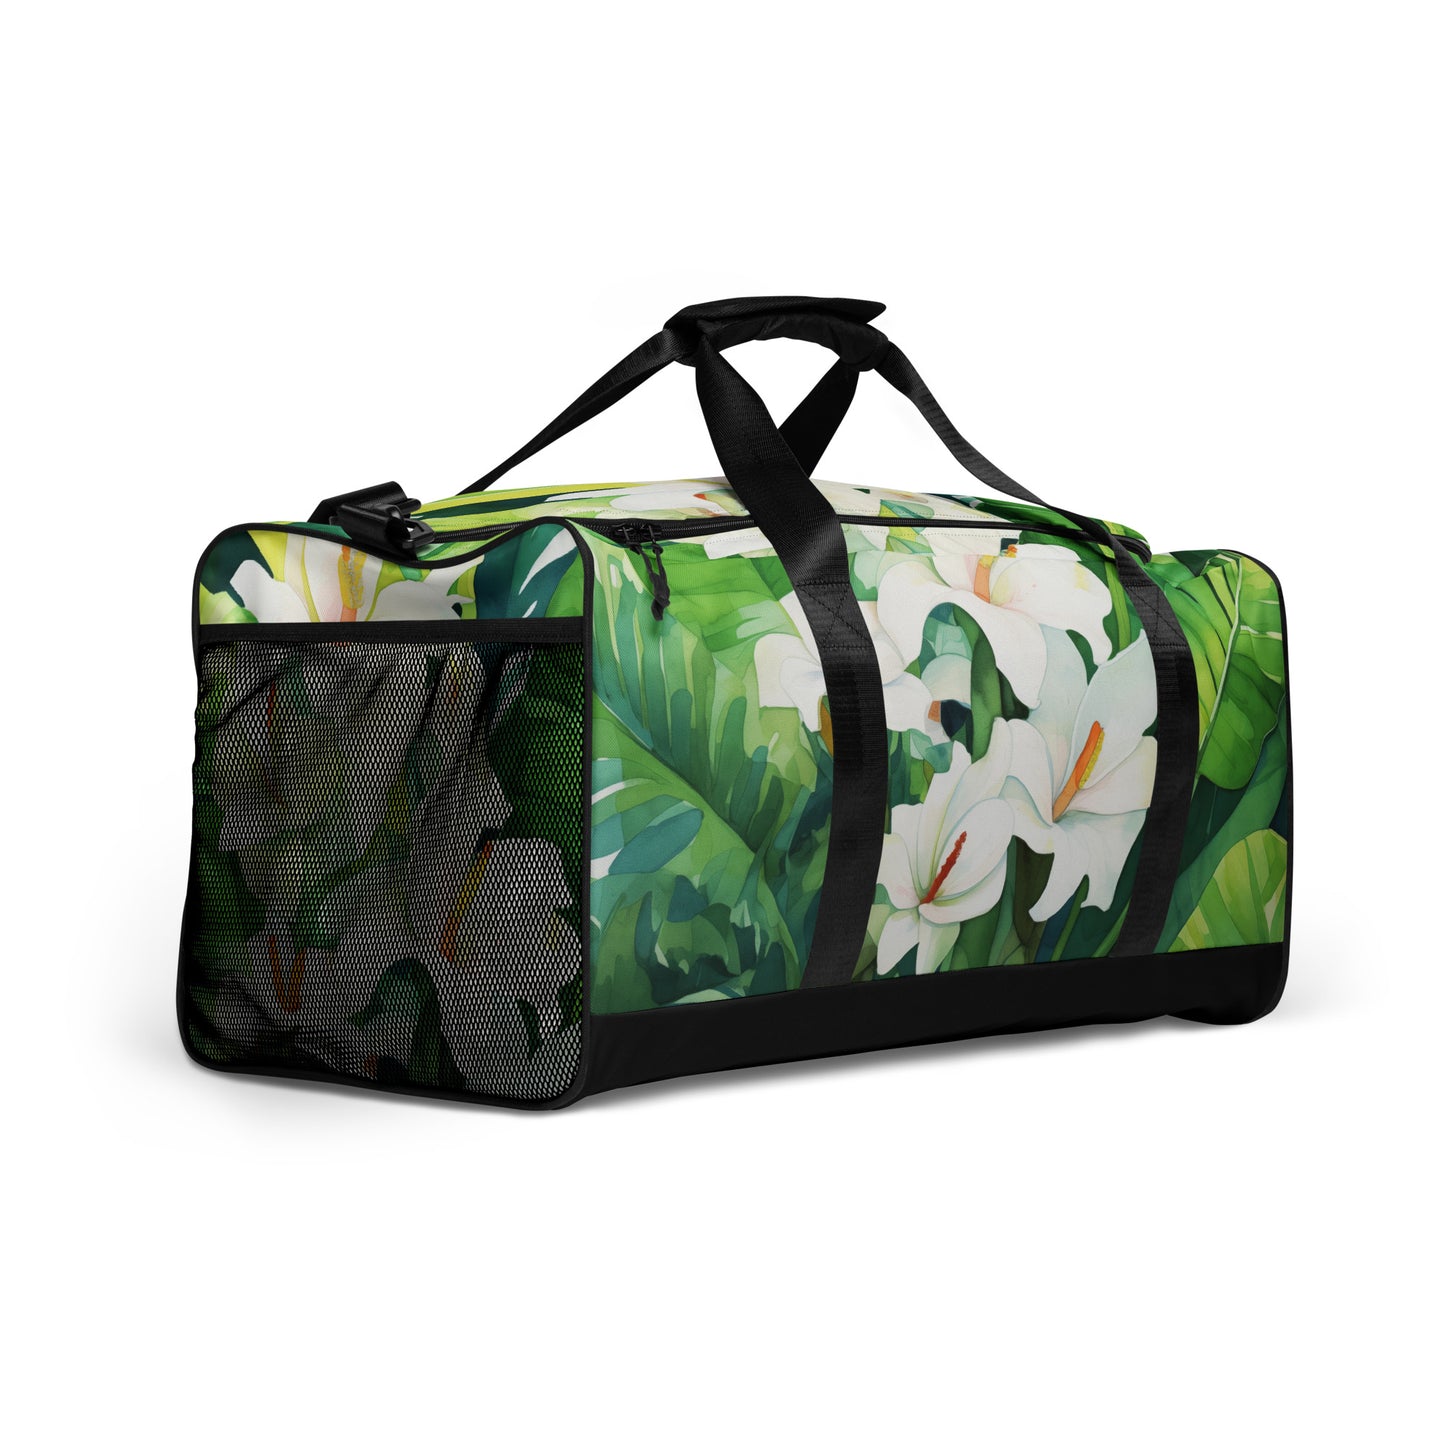 Tropical Gardens 5 Duffle Bag